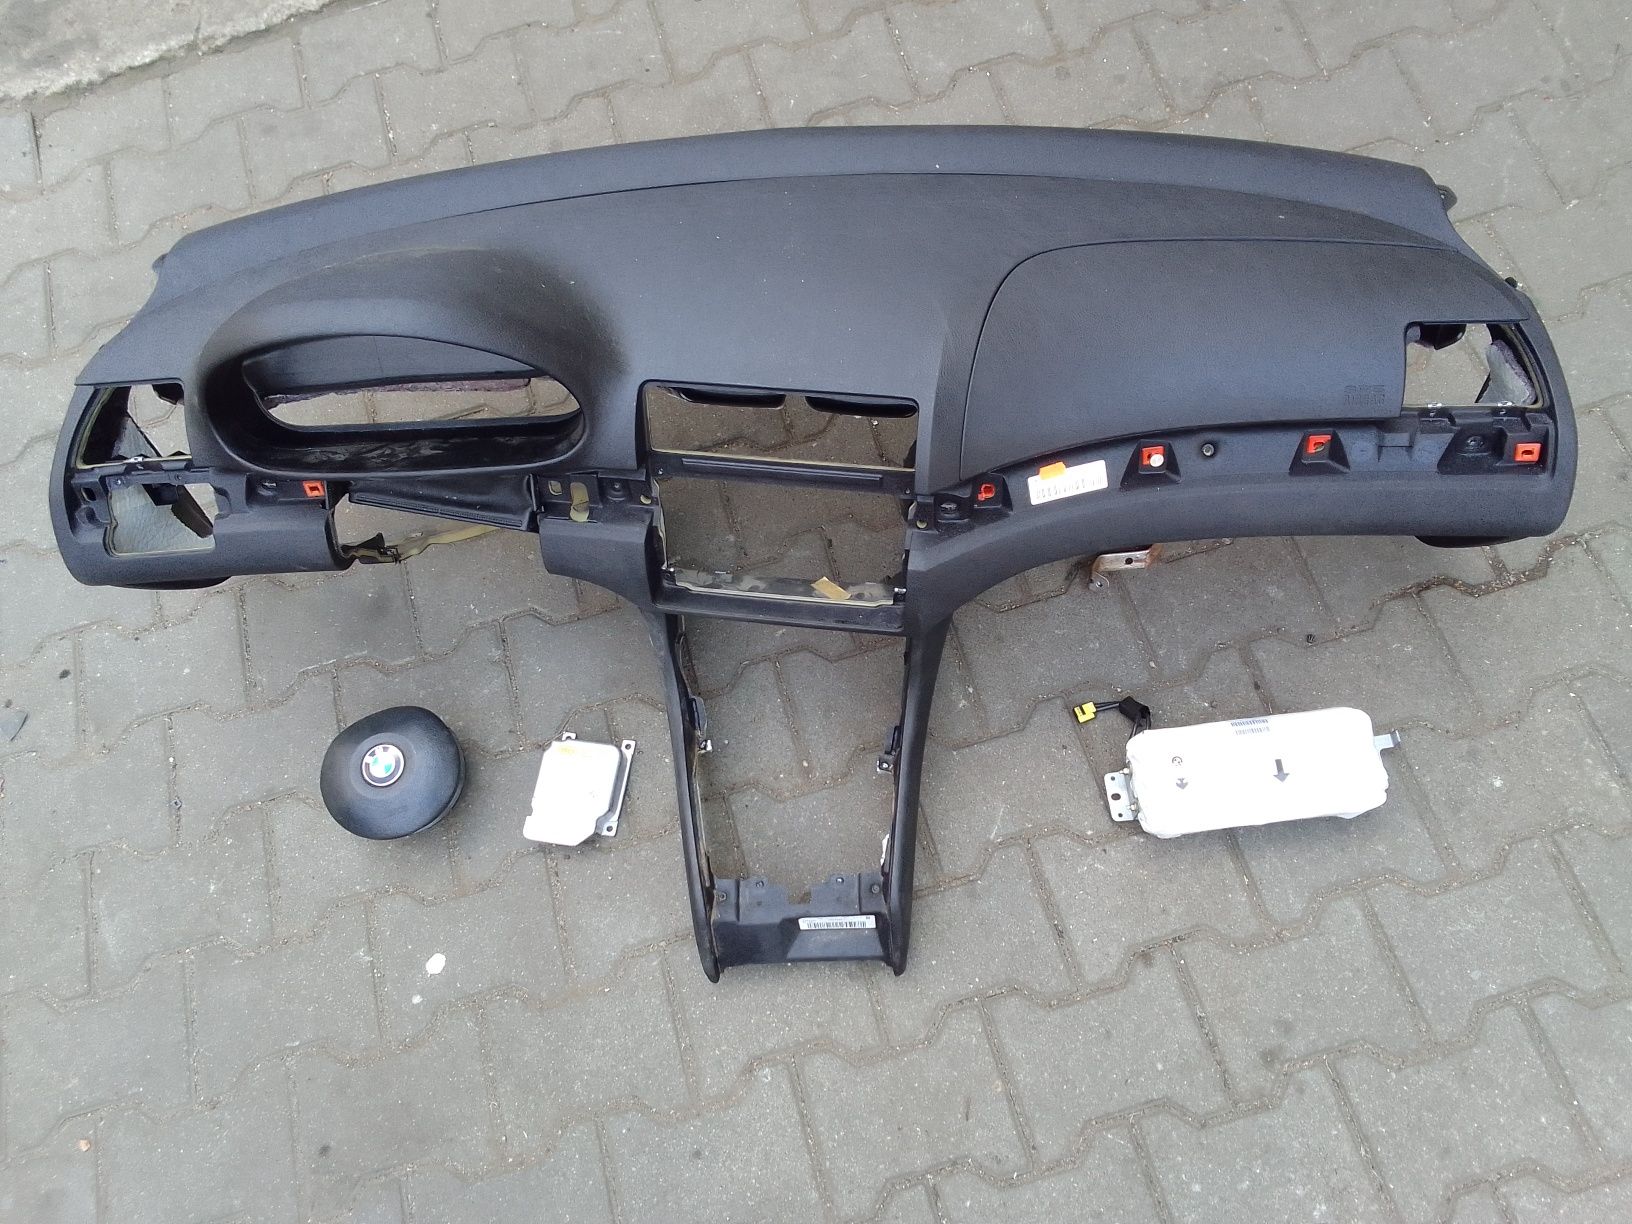 Konsola deska airbag poduszki BMW E46 lift oryginał